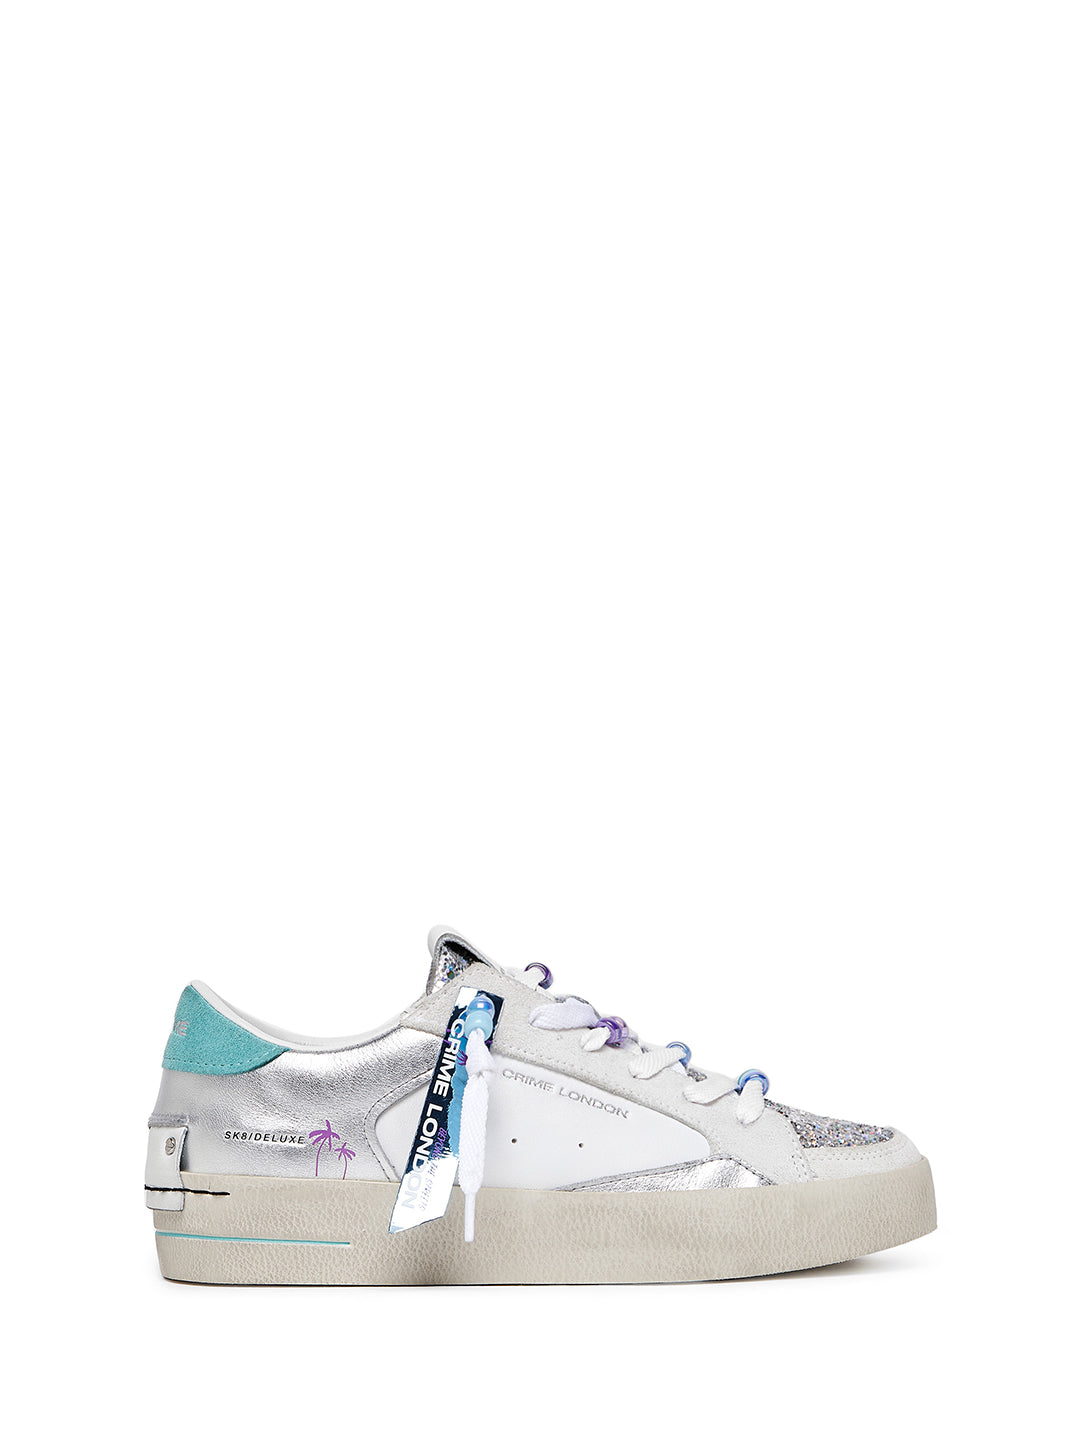 Crime Sk8 Deluxe Azure Charms sneakers bianco con tab azzurro